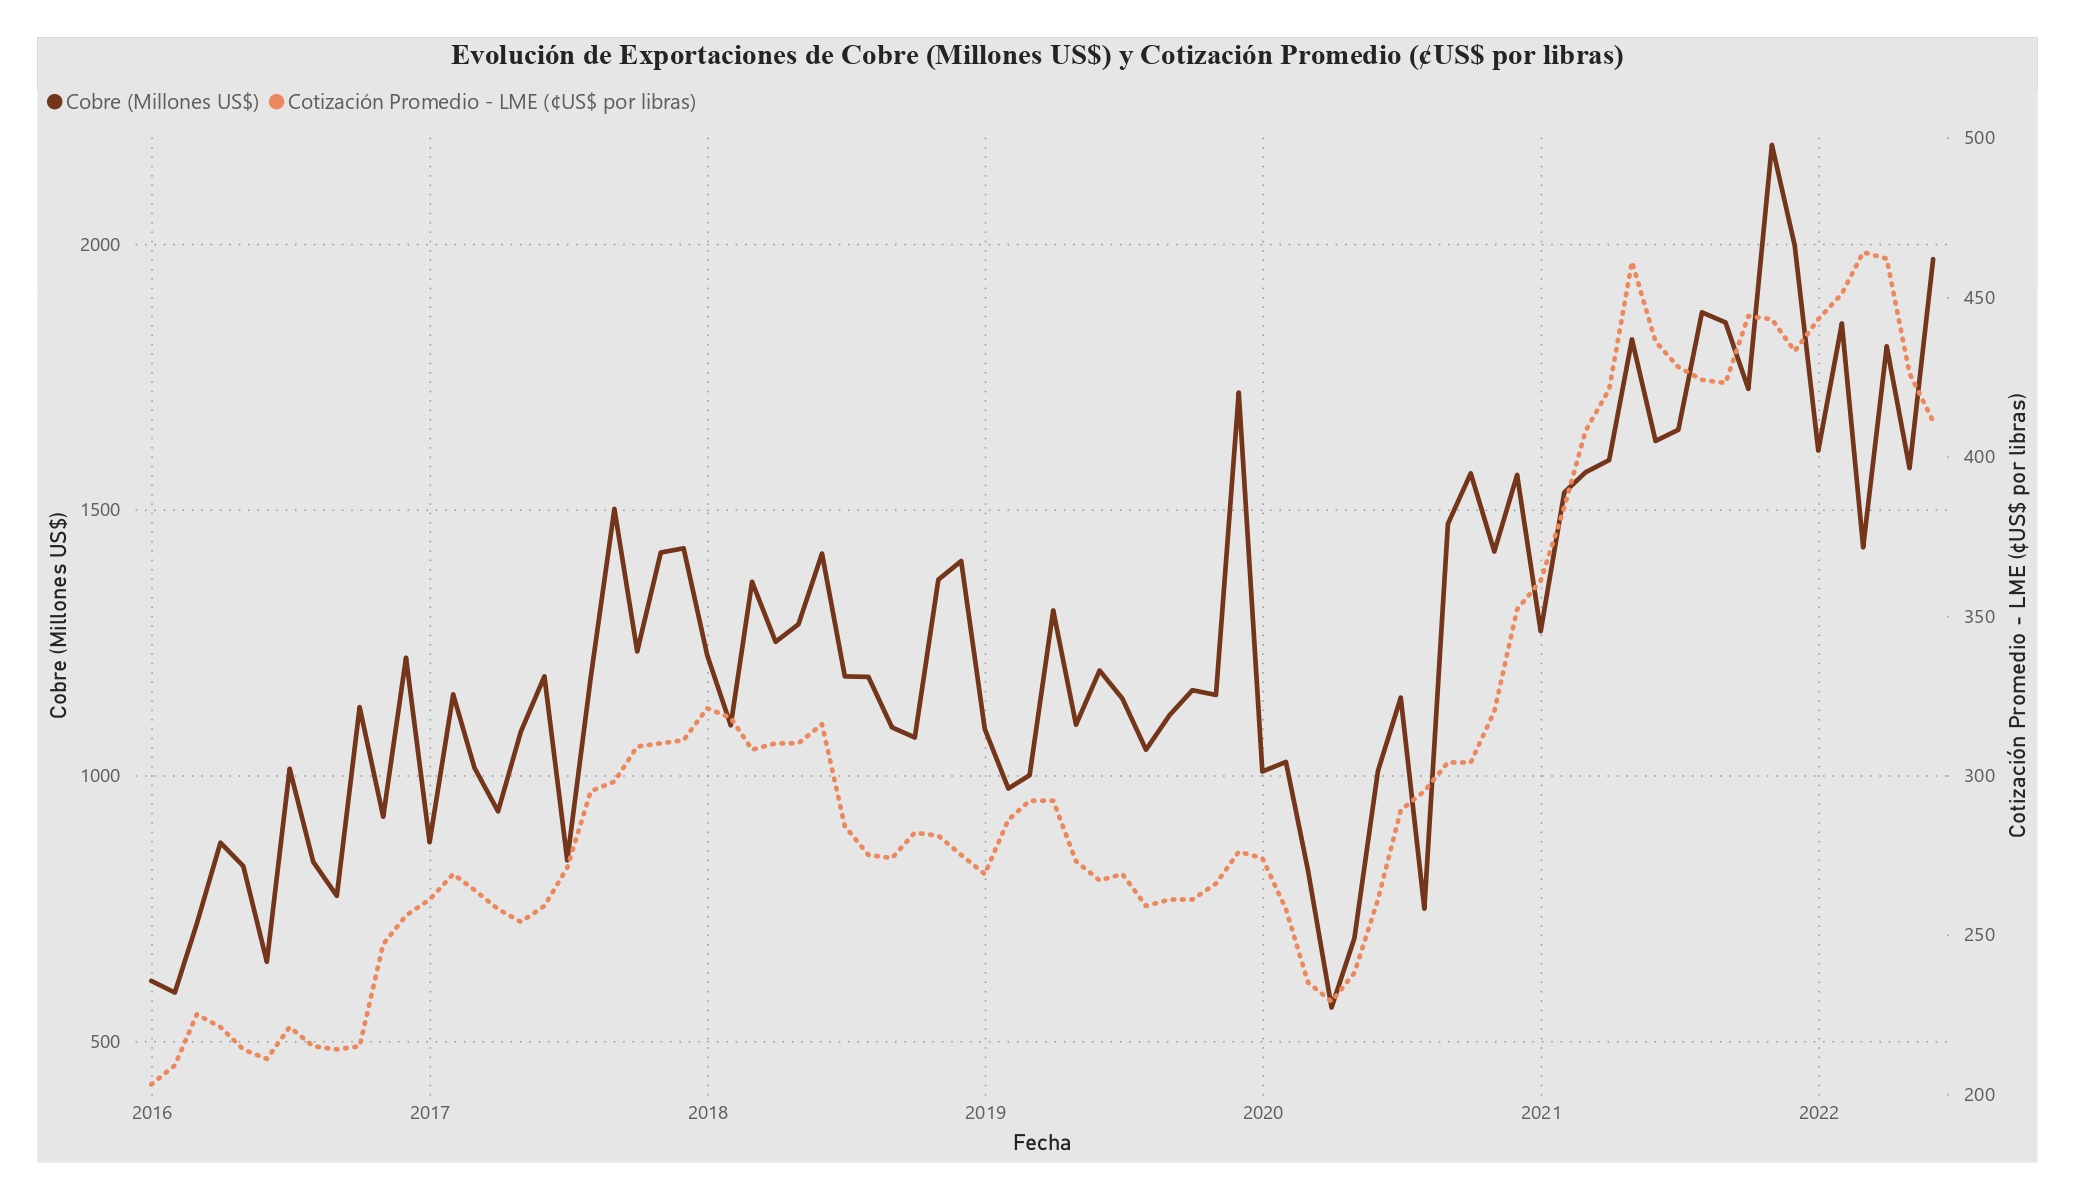 Evolución de Exportaciones de Cobre, según BCRP.